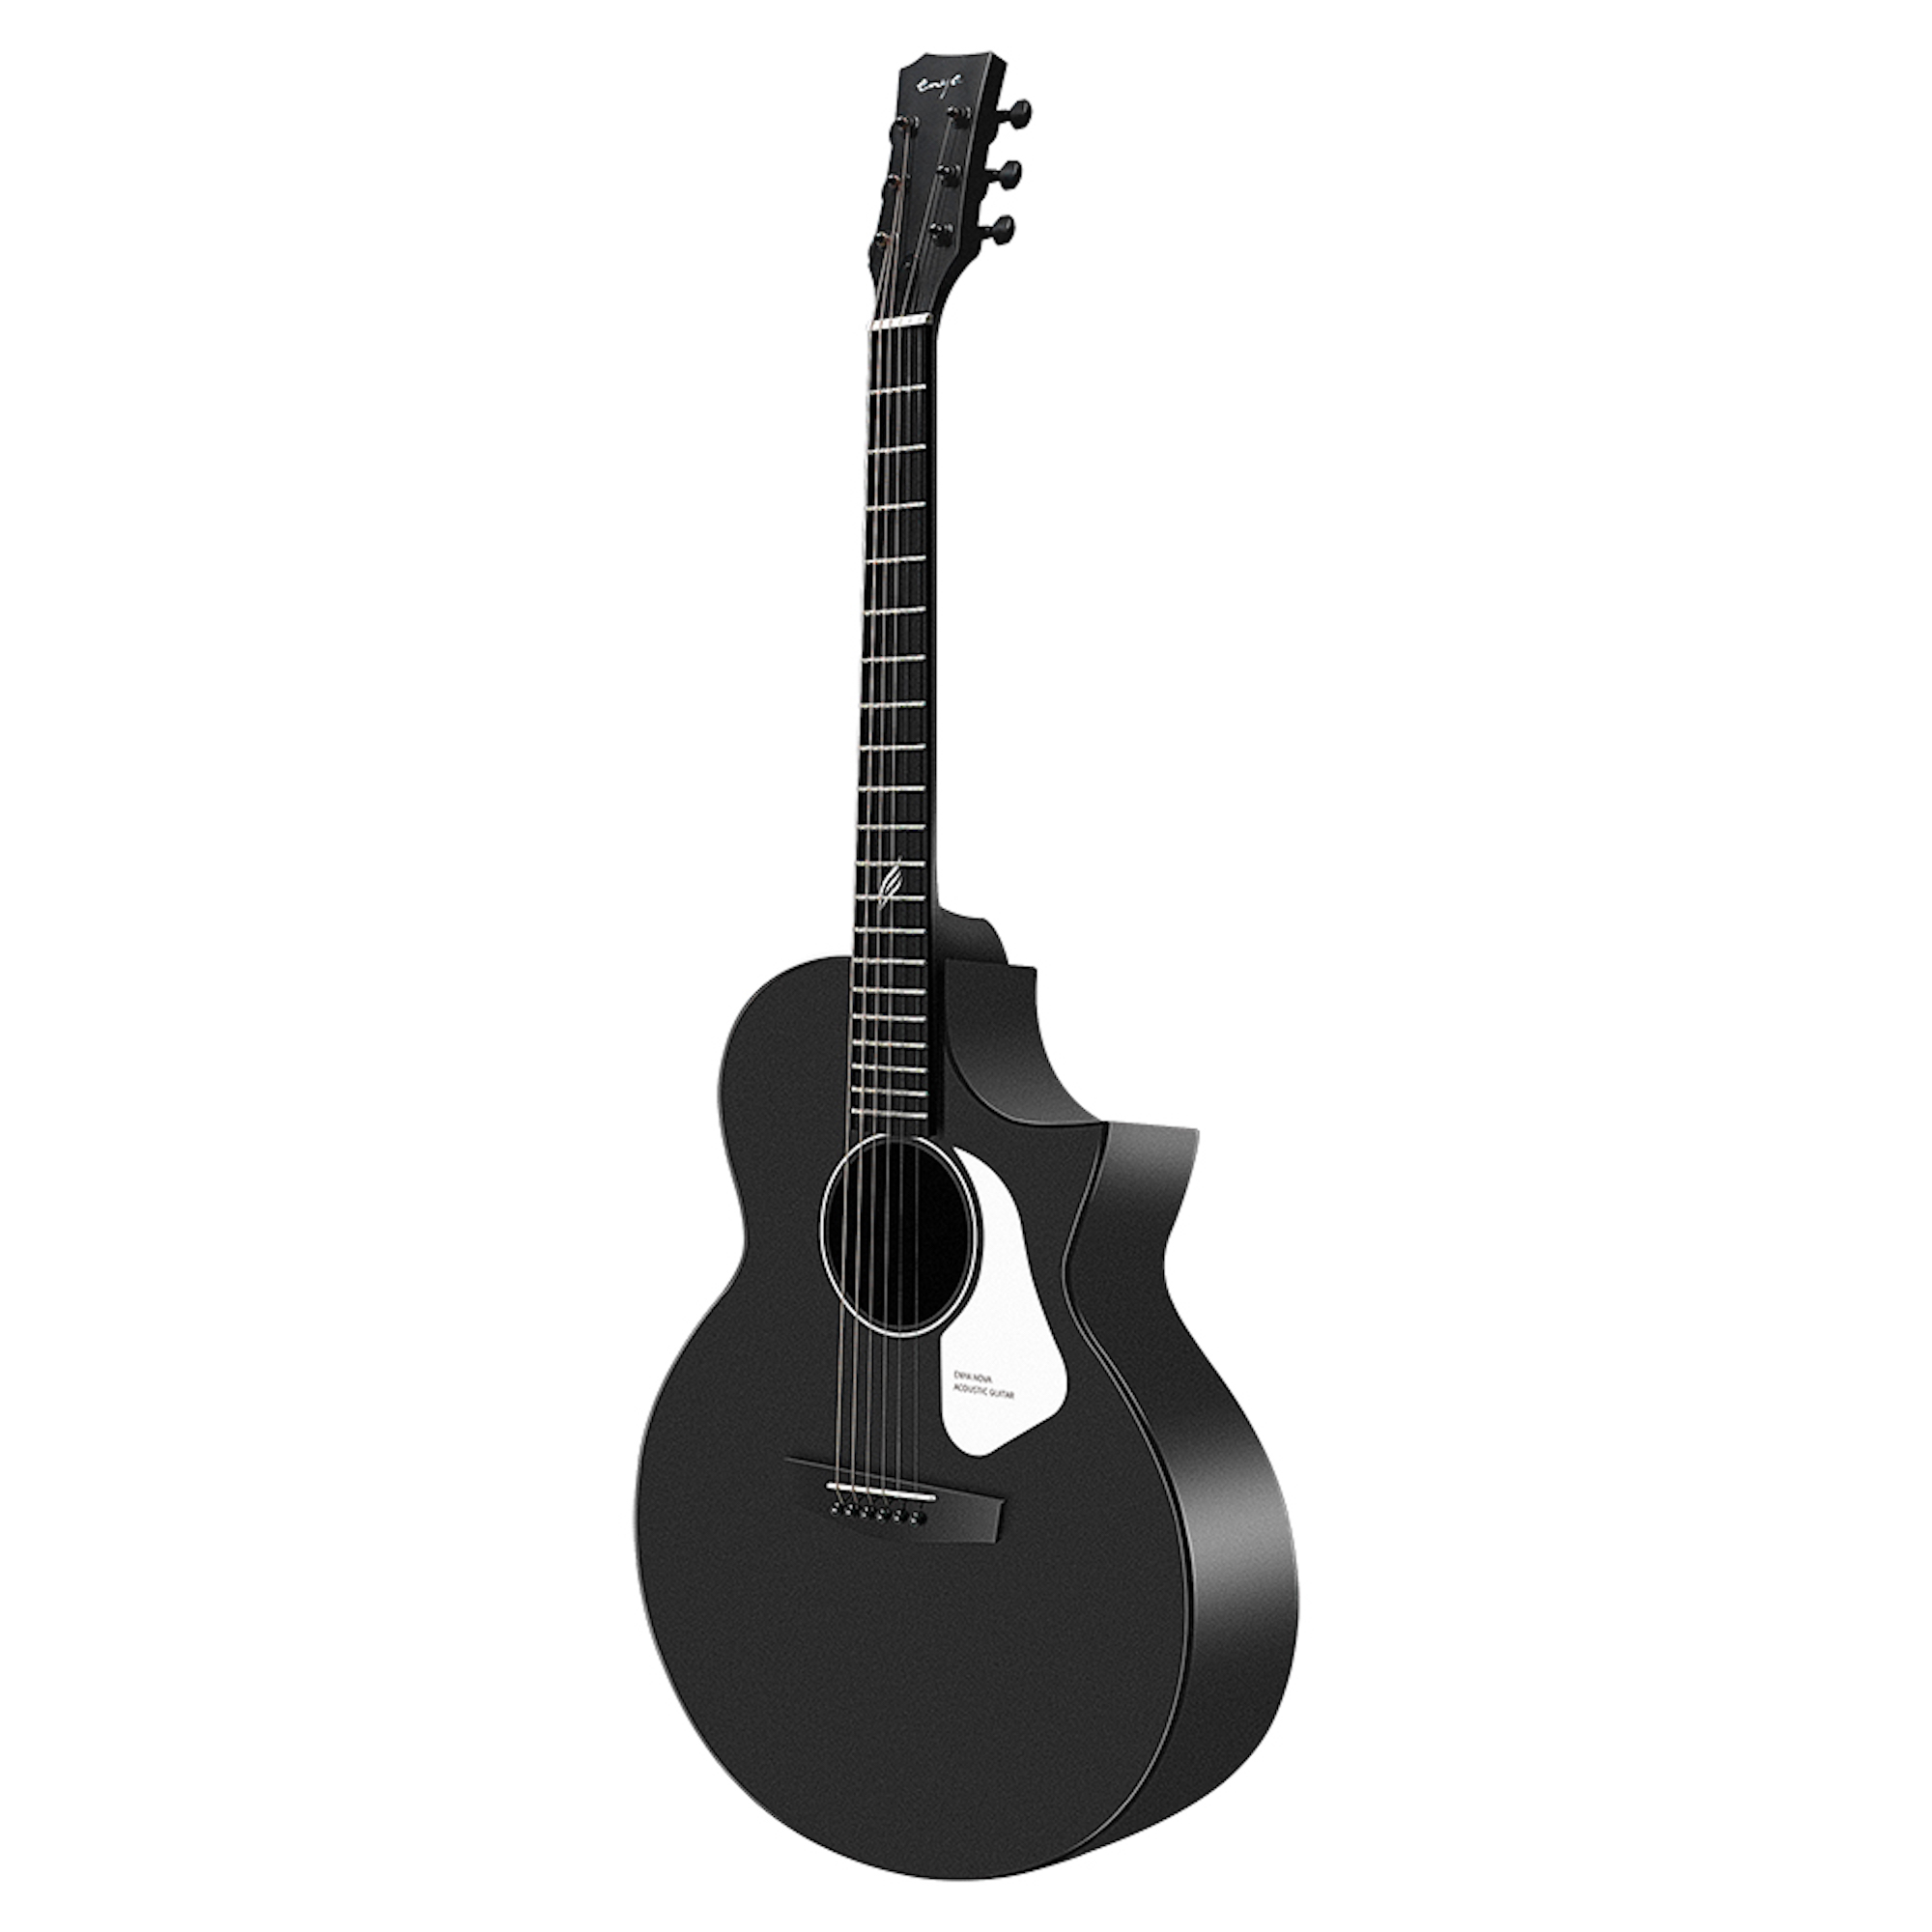 Enya Nova GE TransAcoustic Guitar Black online price in india